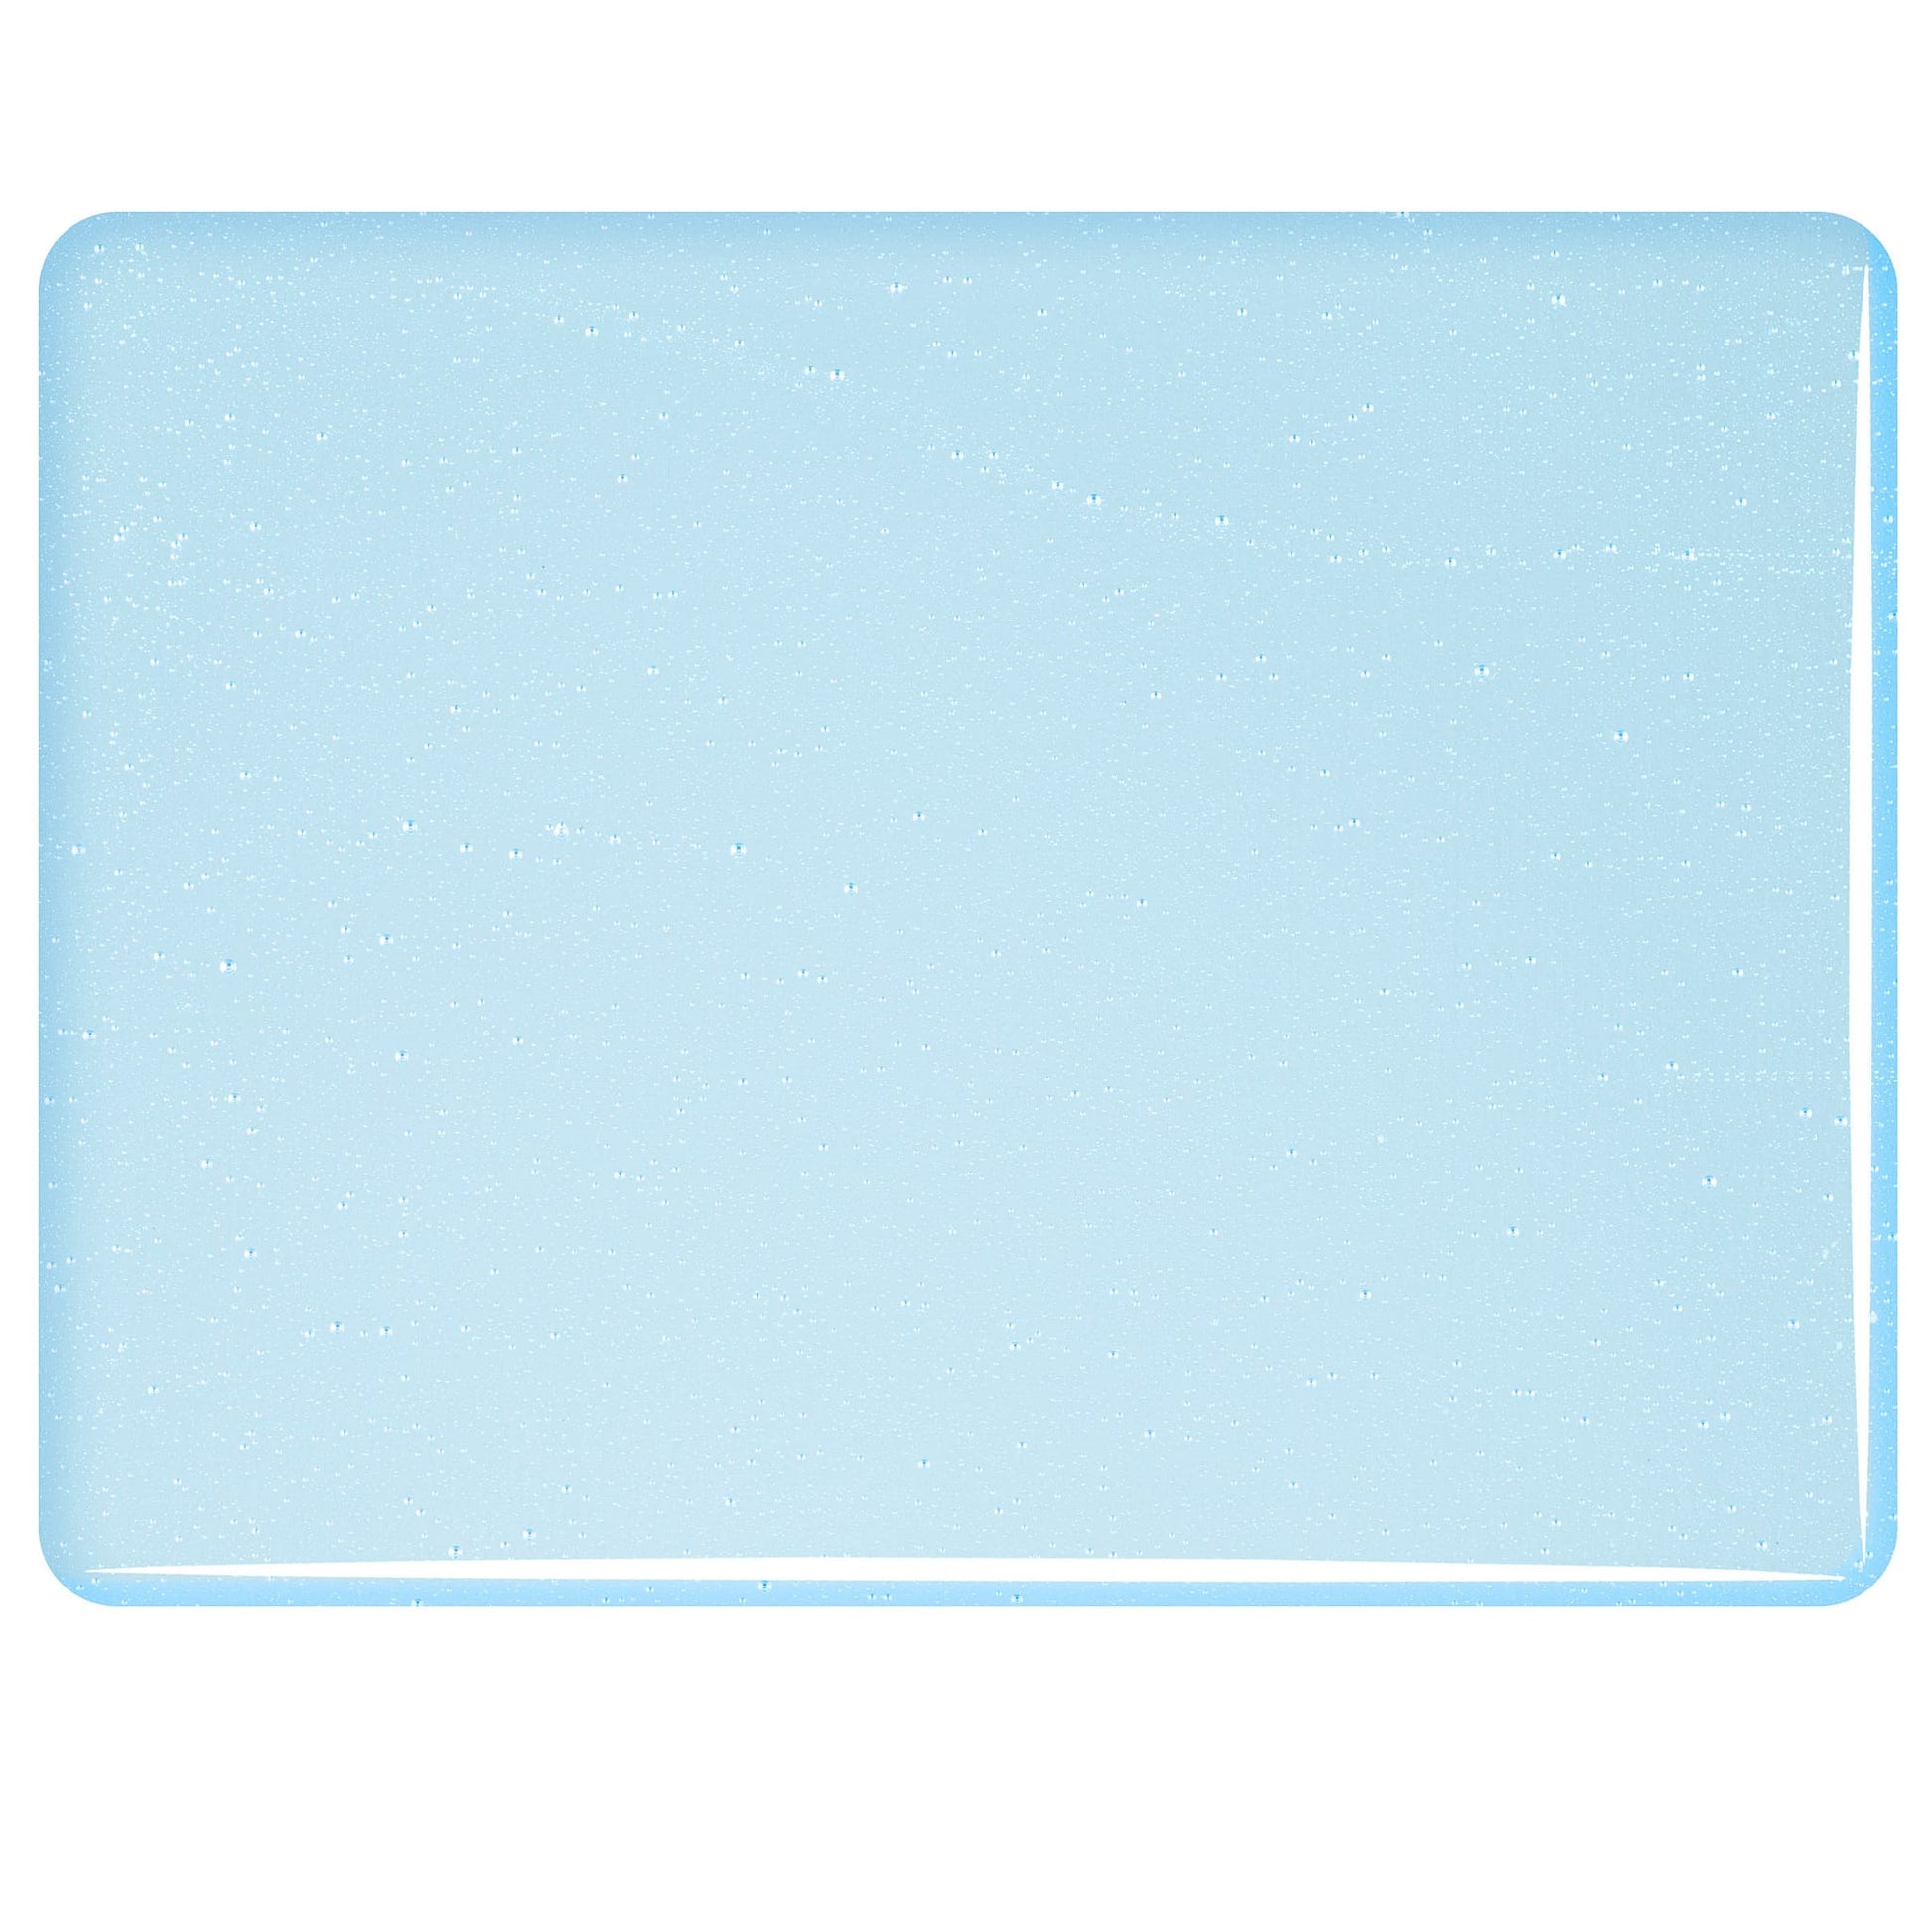 Bullseye COE90 Fusing Glass 001816 Turquoise Blue Tint Handy Sheet